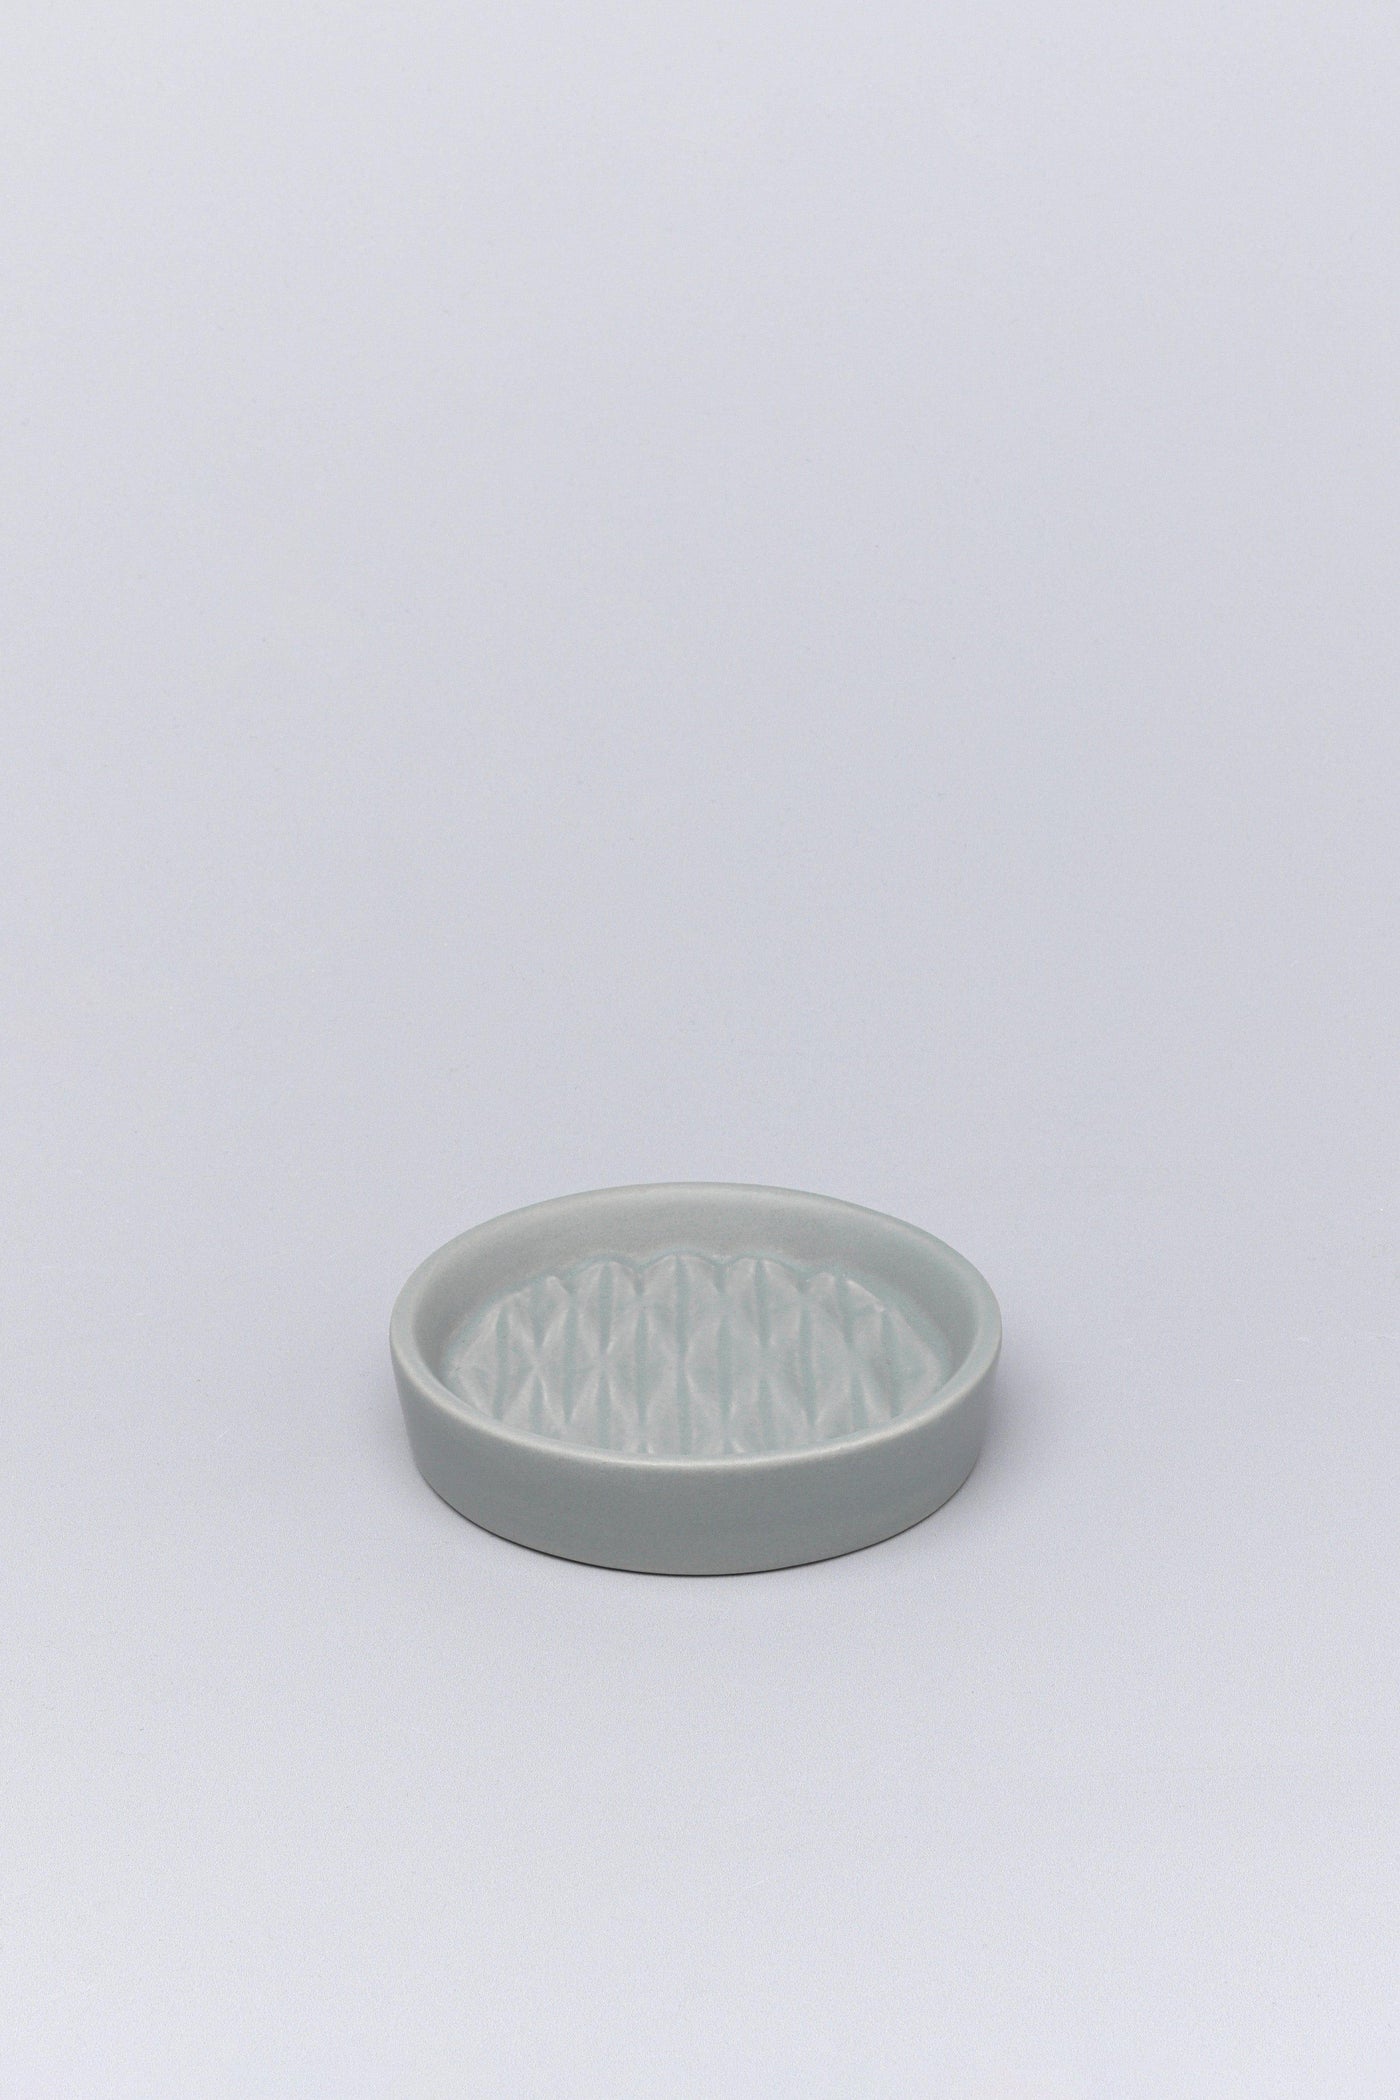 Gdecorstore Bathroom Grey Grey Pattern Ceramic Bath Accessory Set